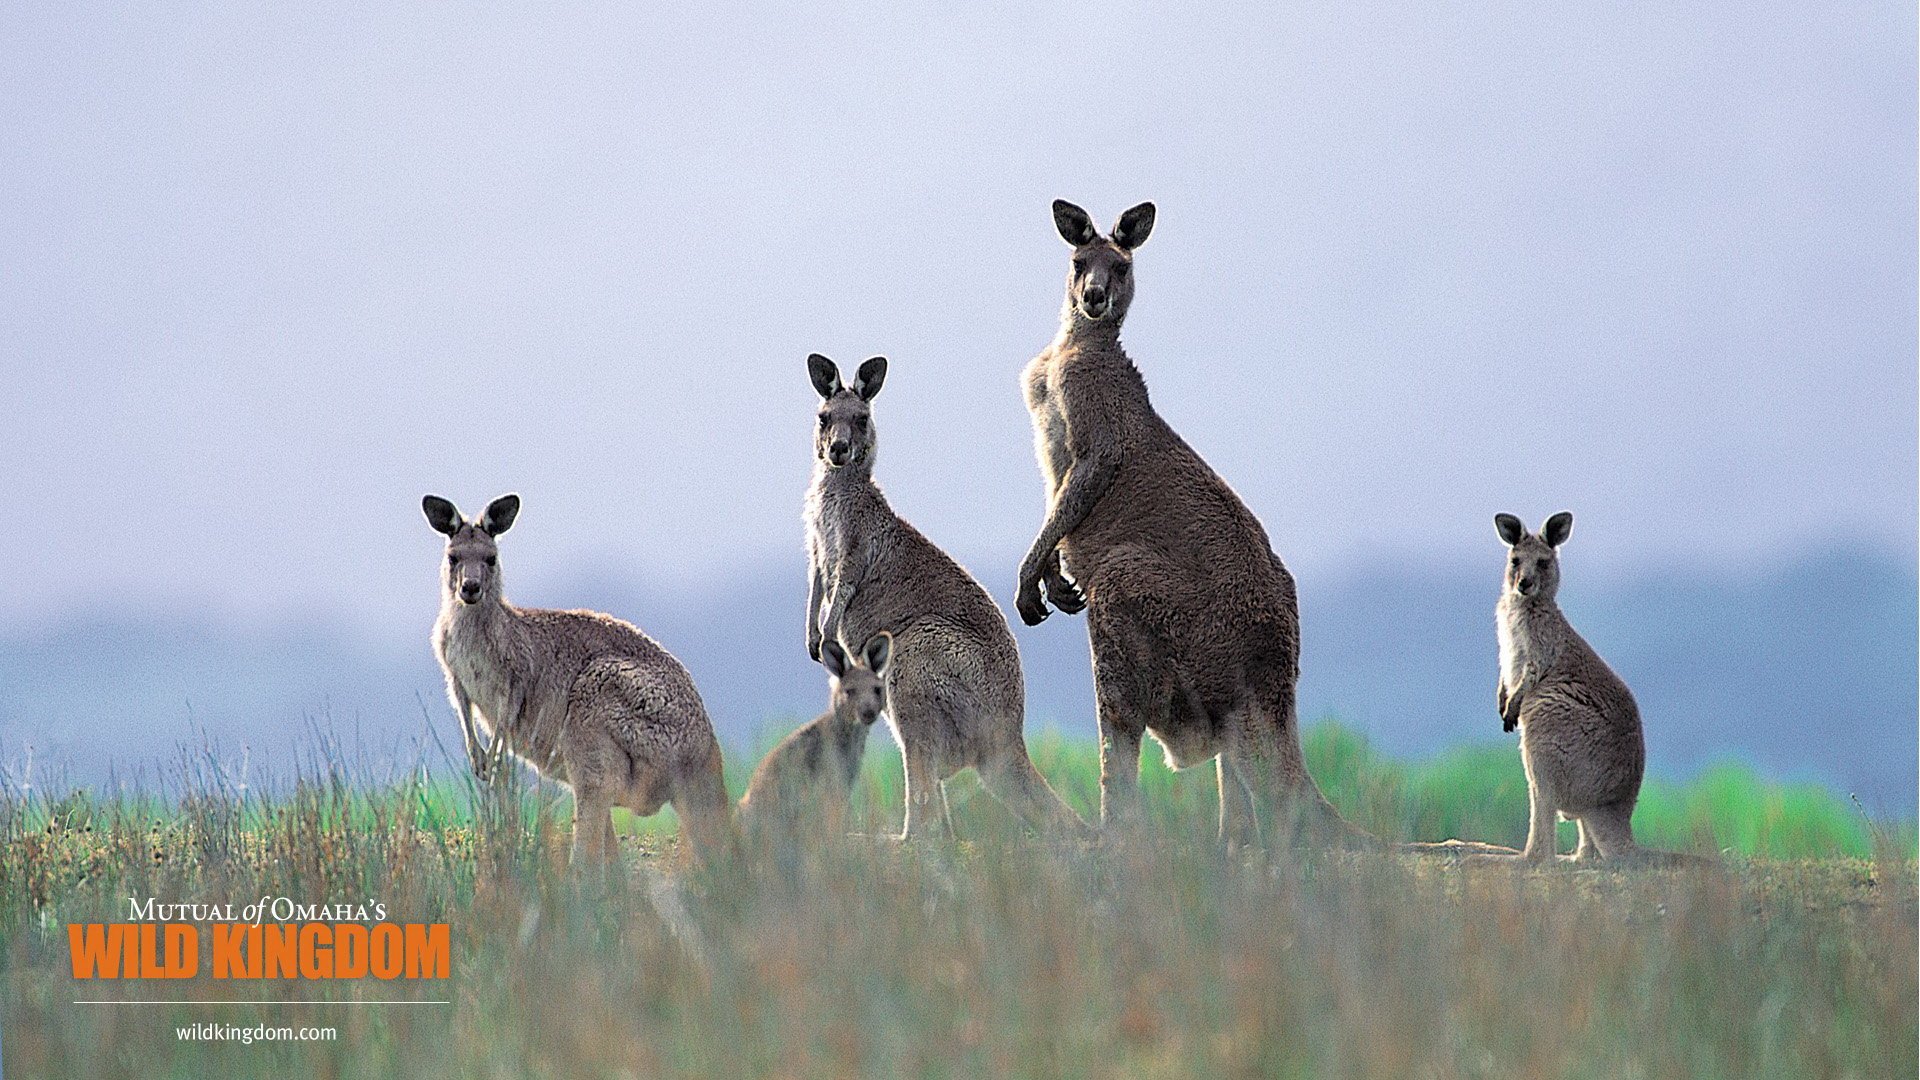 Download wallpaper 1350x2400 kangaroo ears look cute australia iphone  876s6 for parallax hd background